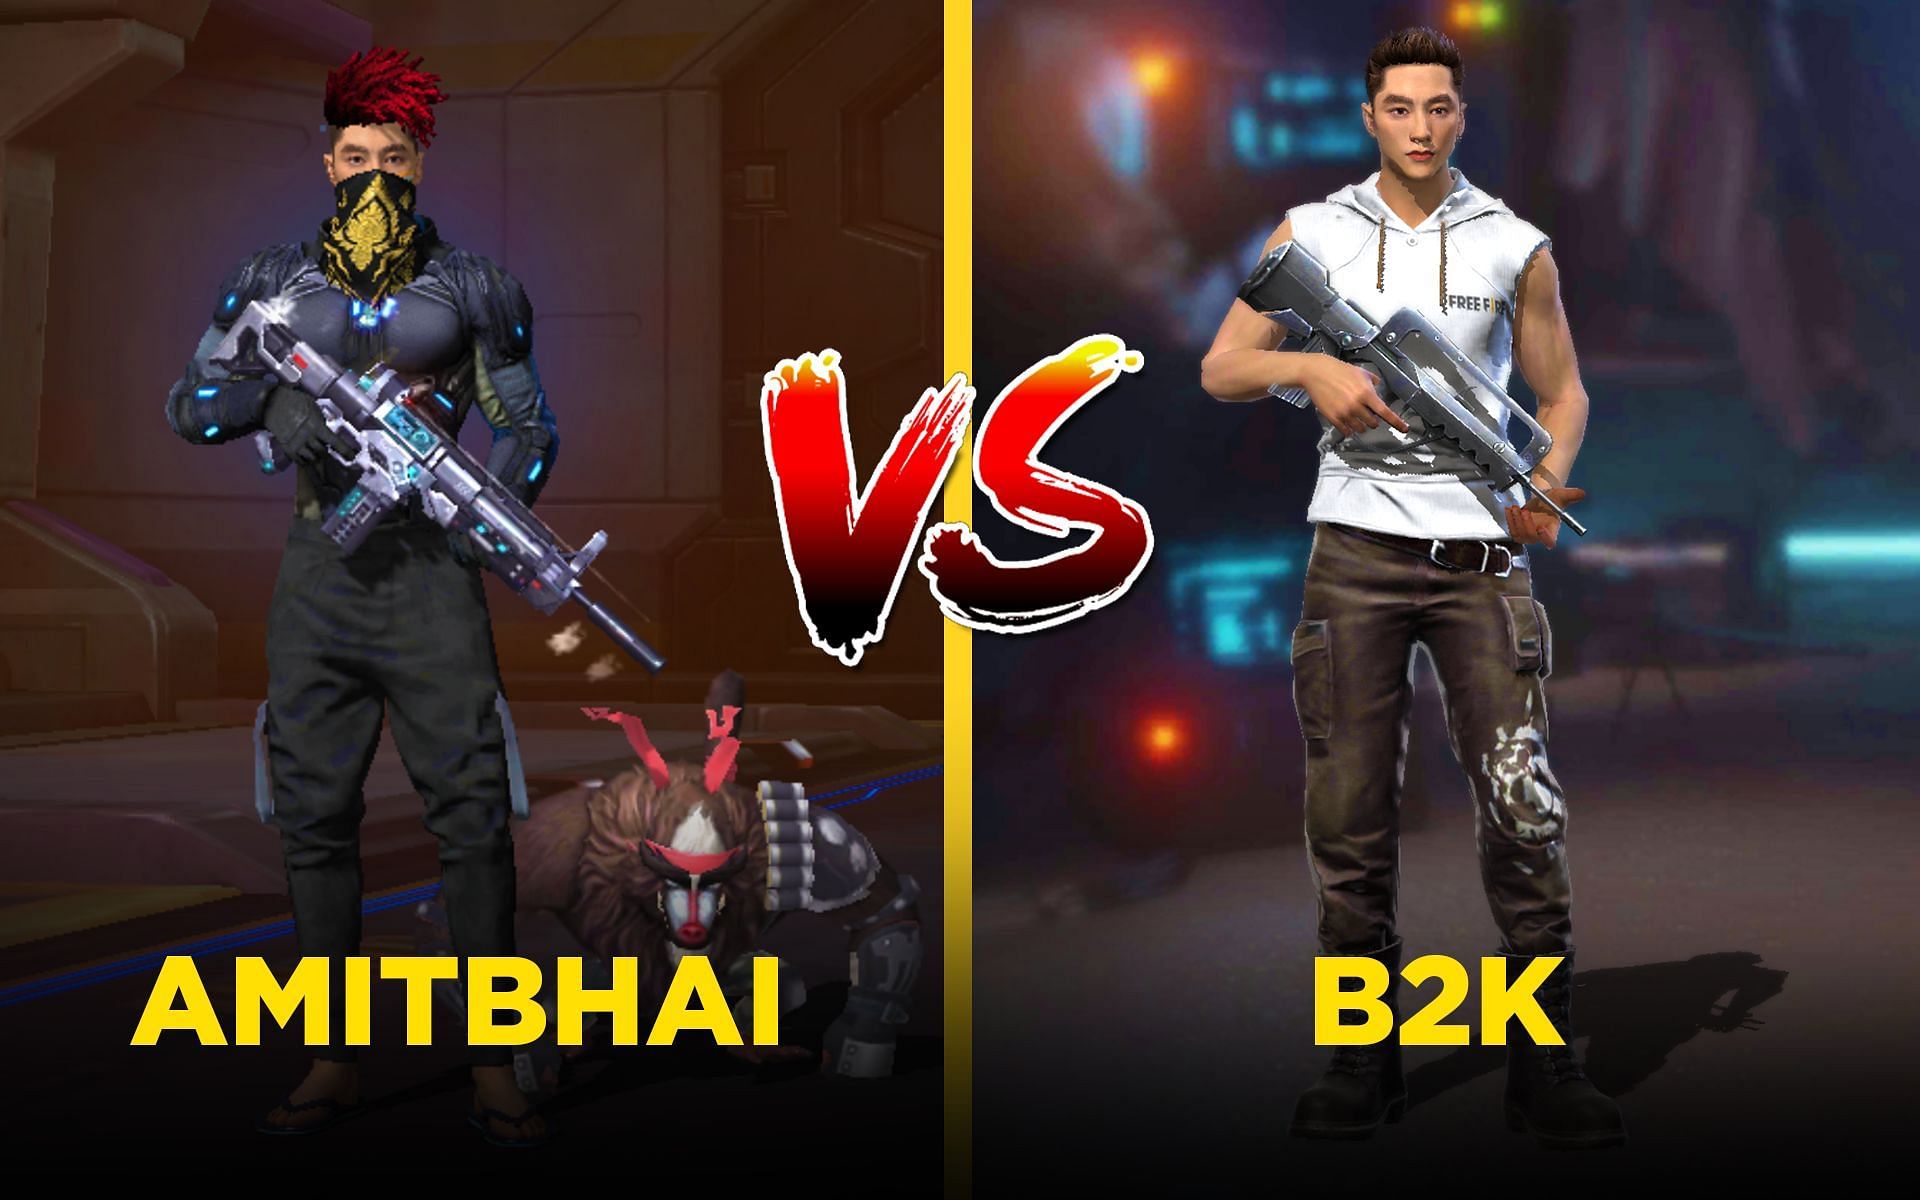 Amitbhai vs B2K (Image via Sportskeeda)